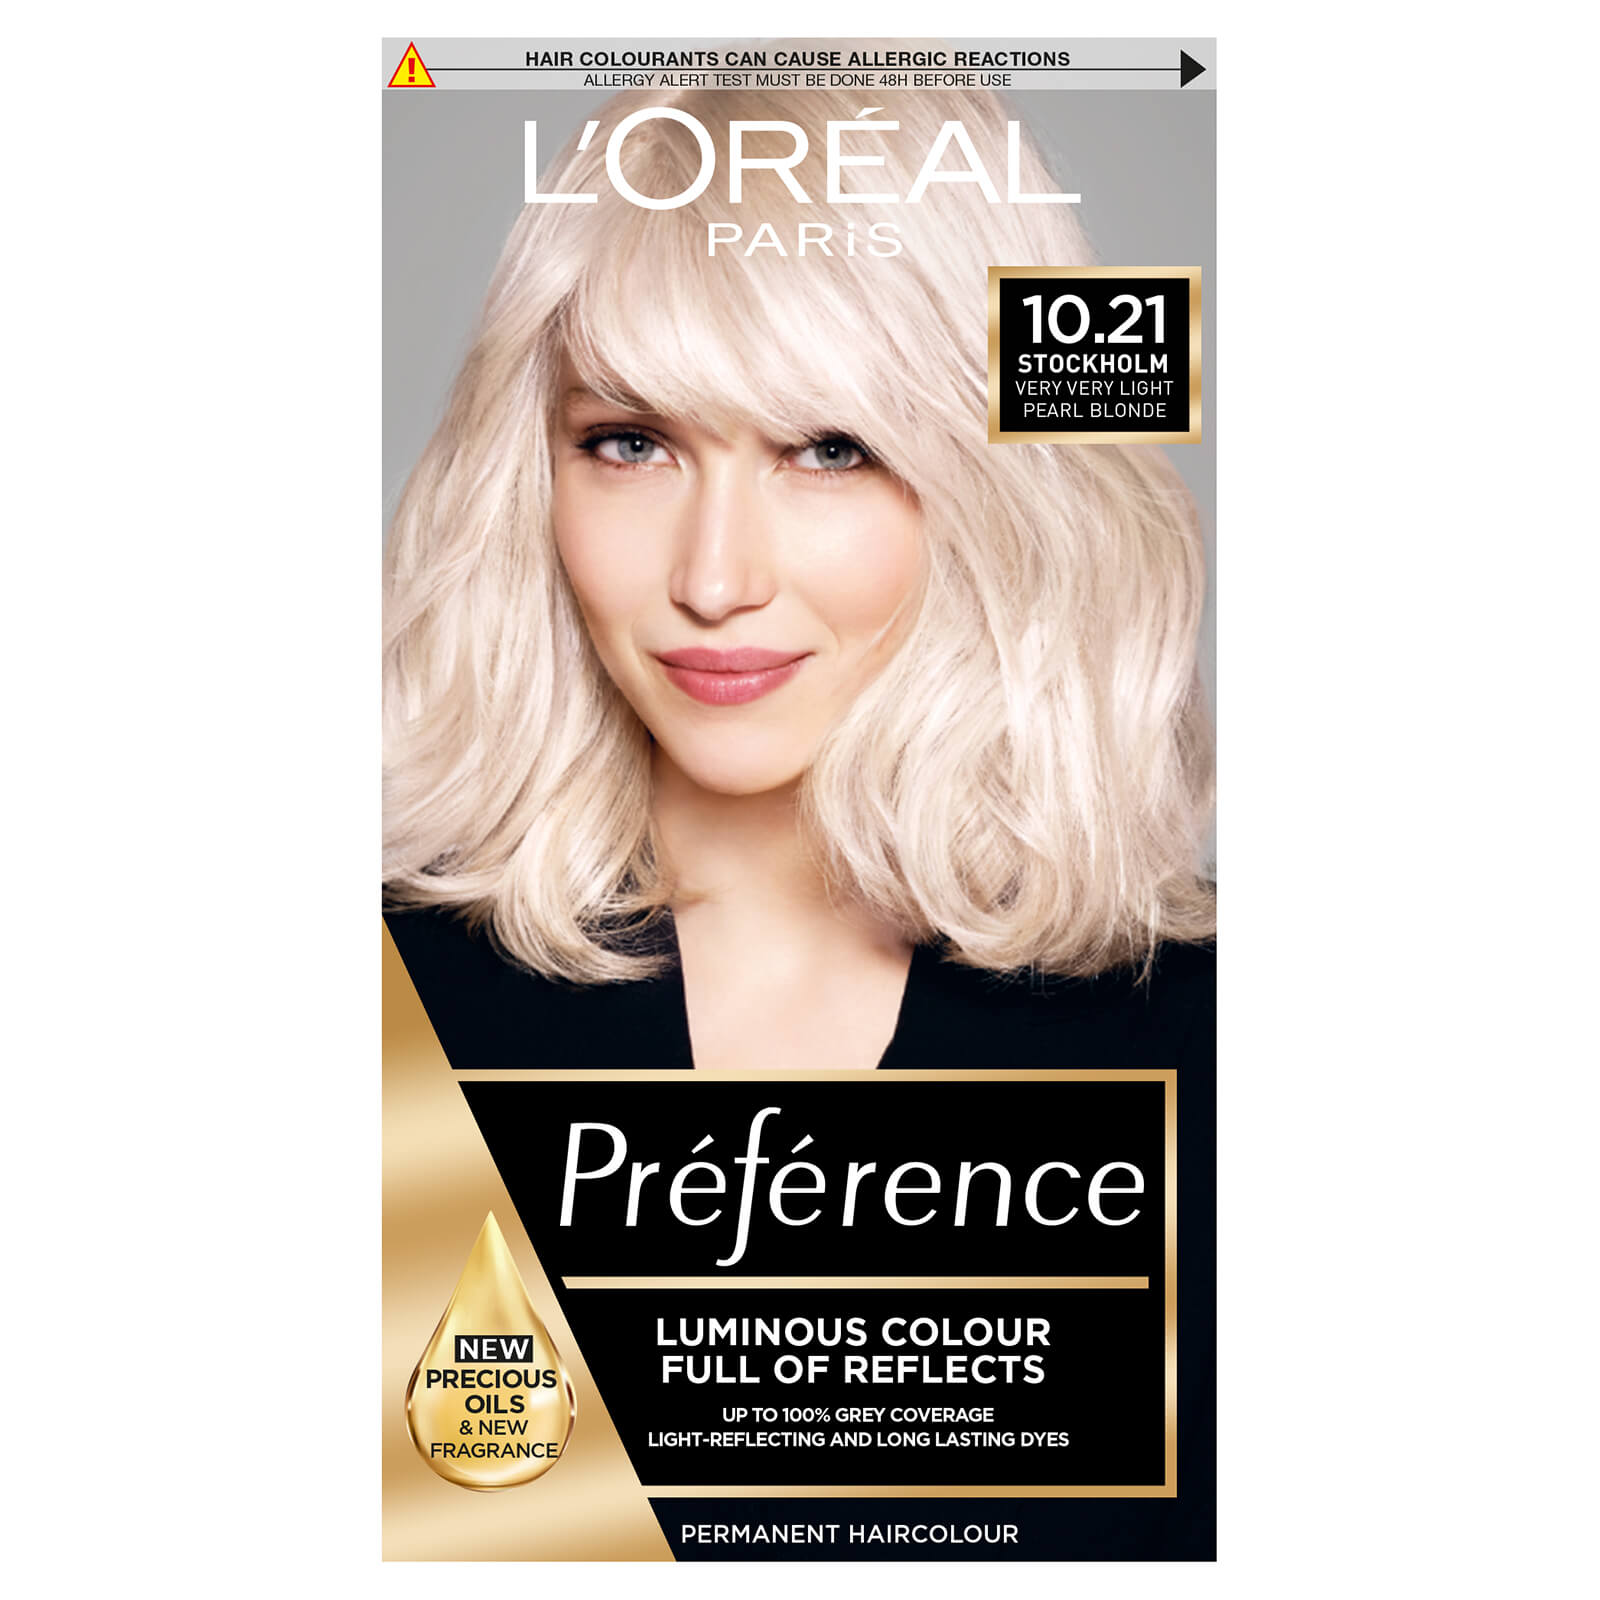 L'Oreal Paris Preference Infinia Hair Dye (Various Shades) - 10.21 Stockholm Very Light Pearl Blonde